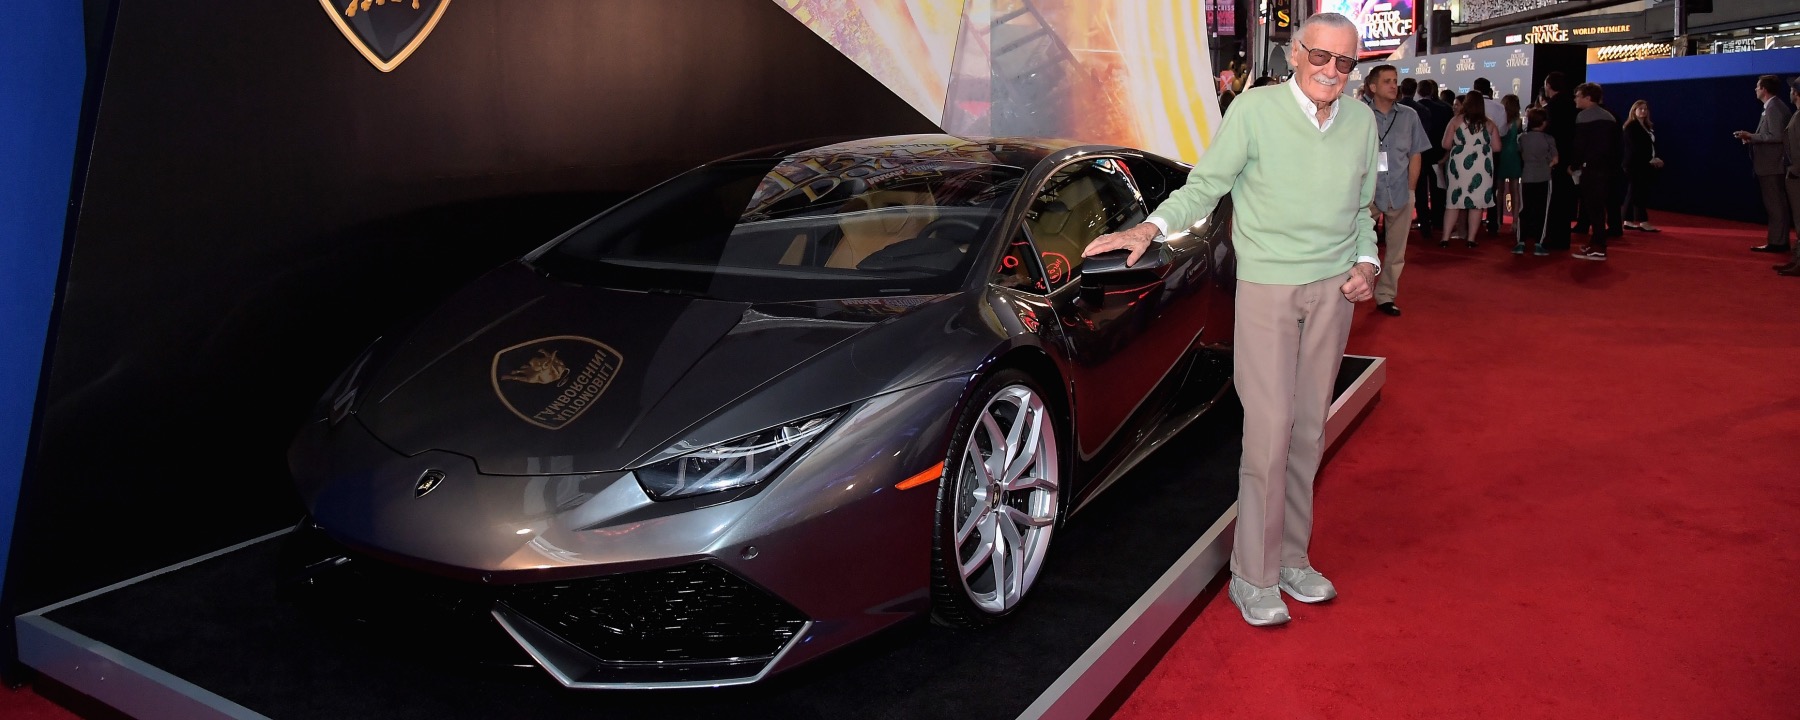 Lamborghini Stars In Dr. Strange - Luxury Car News | indiGO Auto Group